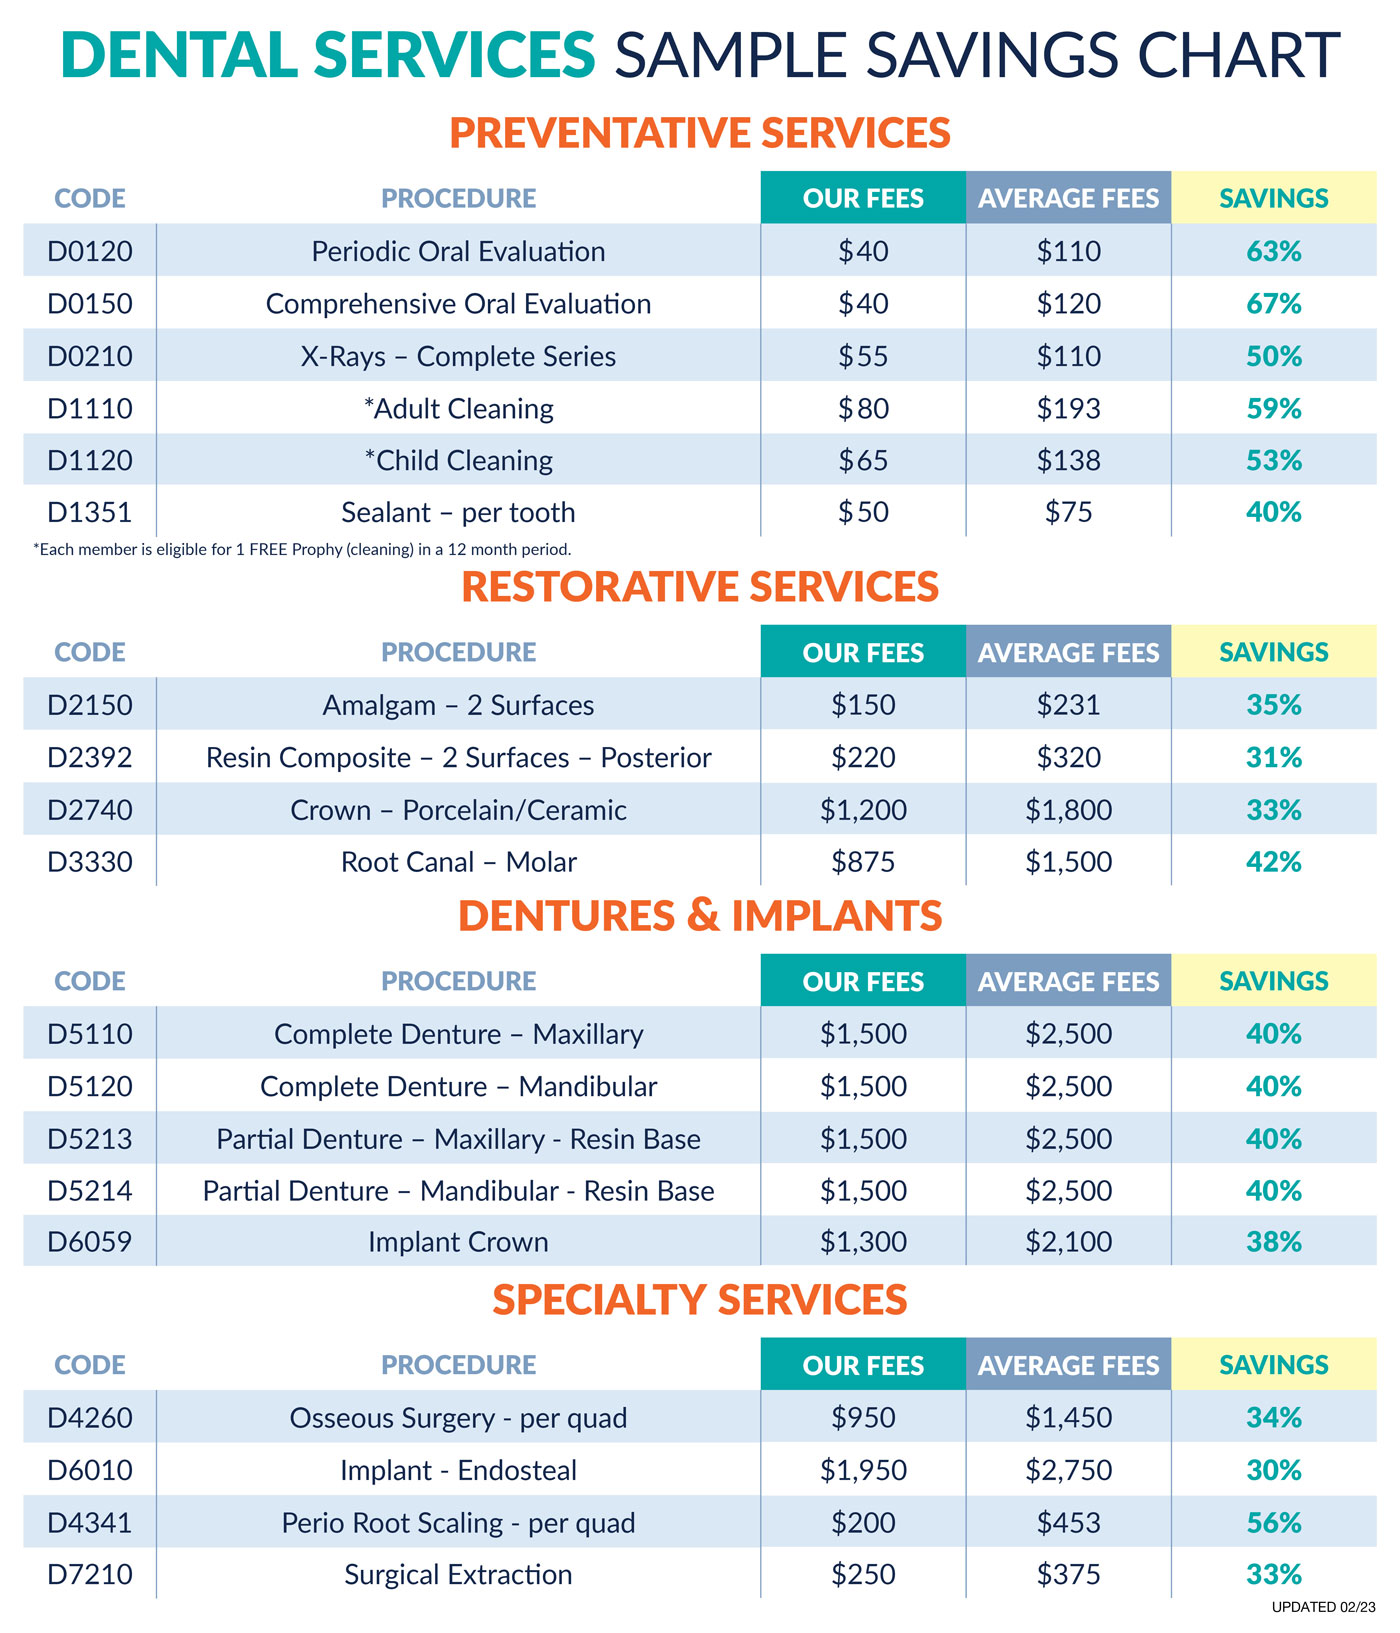 Dental Services Sample Savings Chart